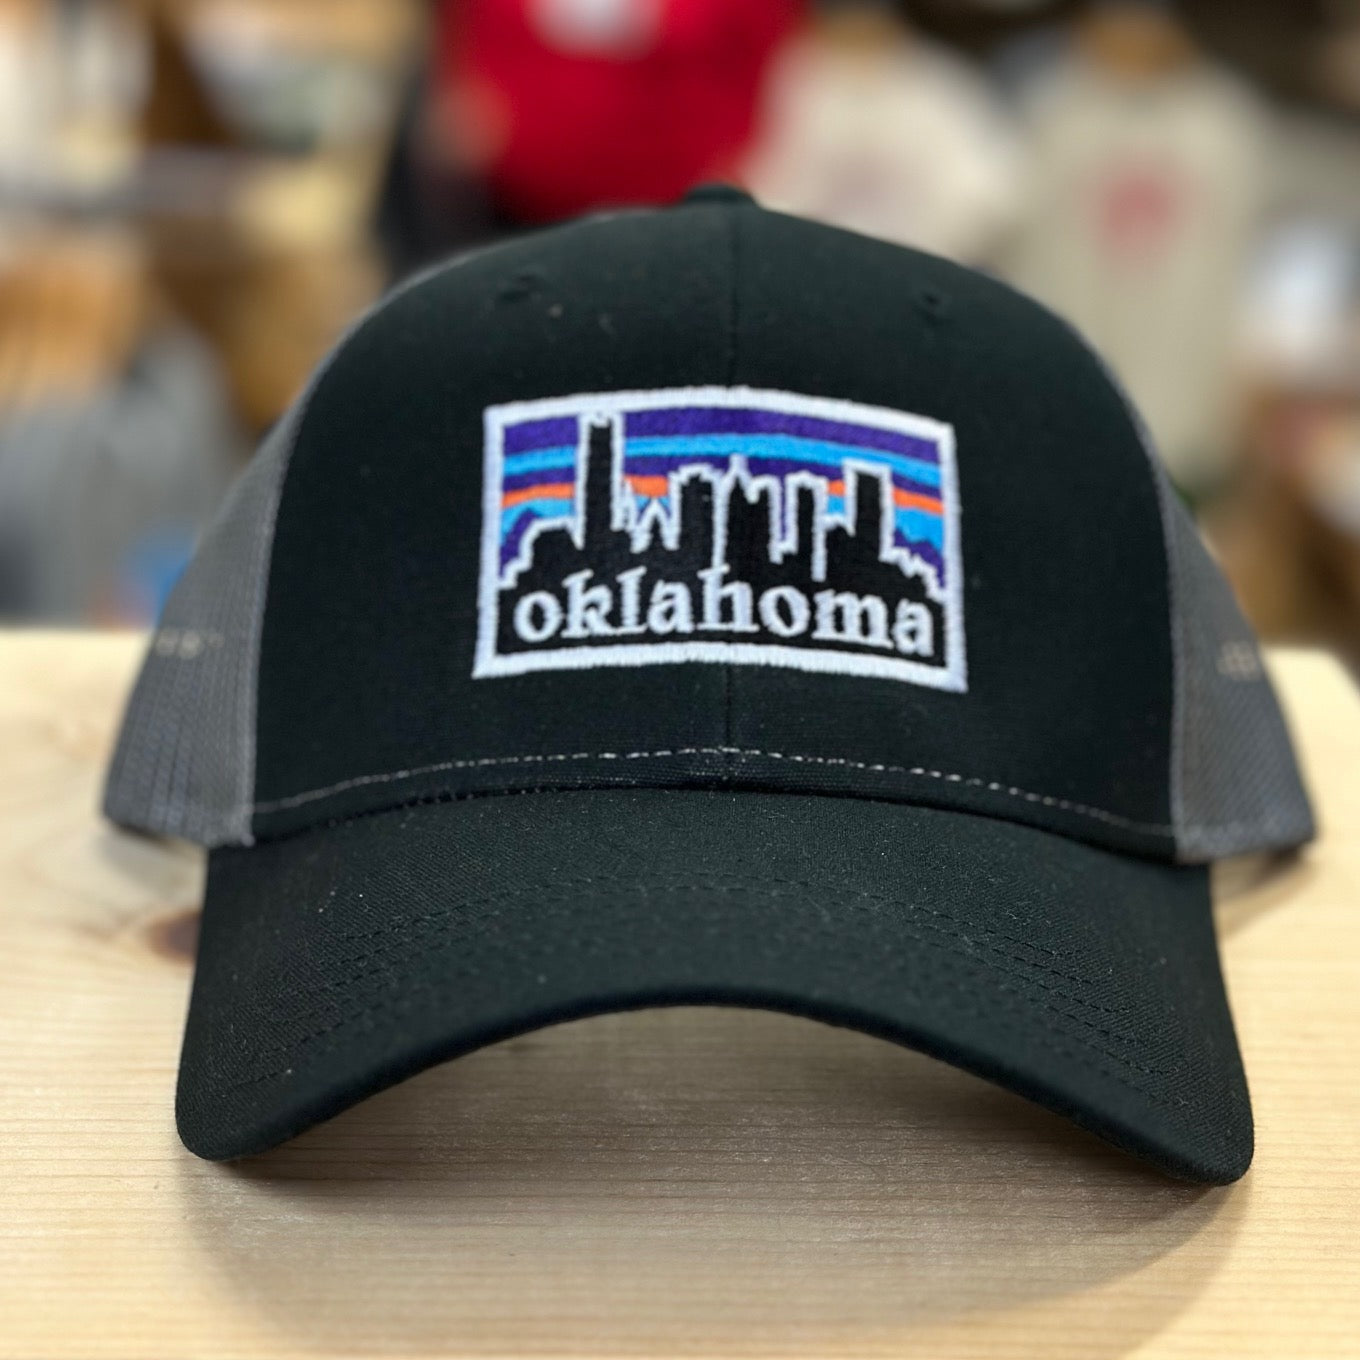 Oklahoma Skyline Hat - Black/Gray